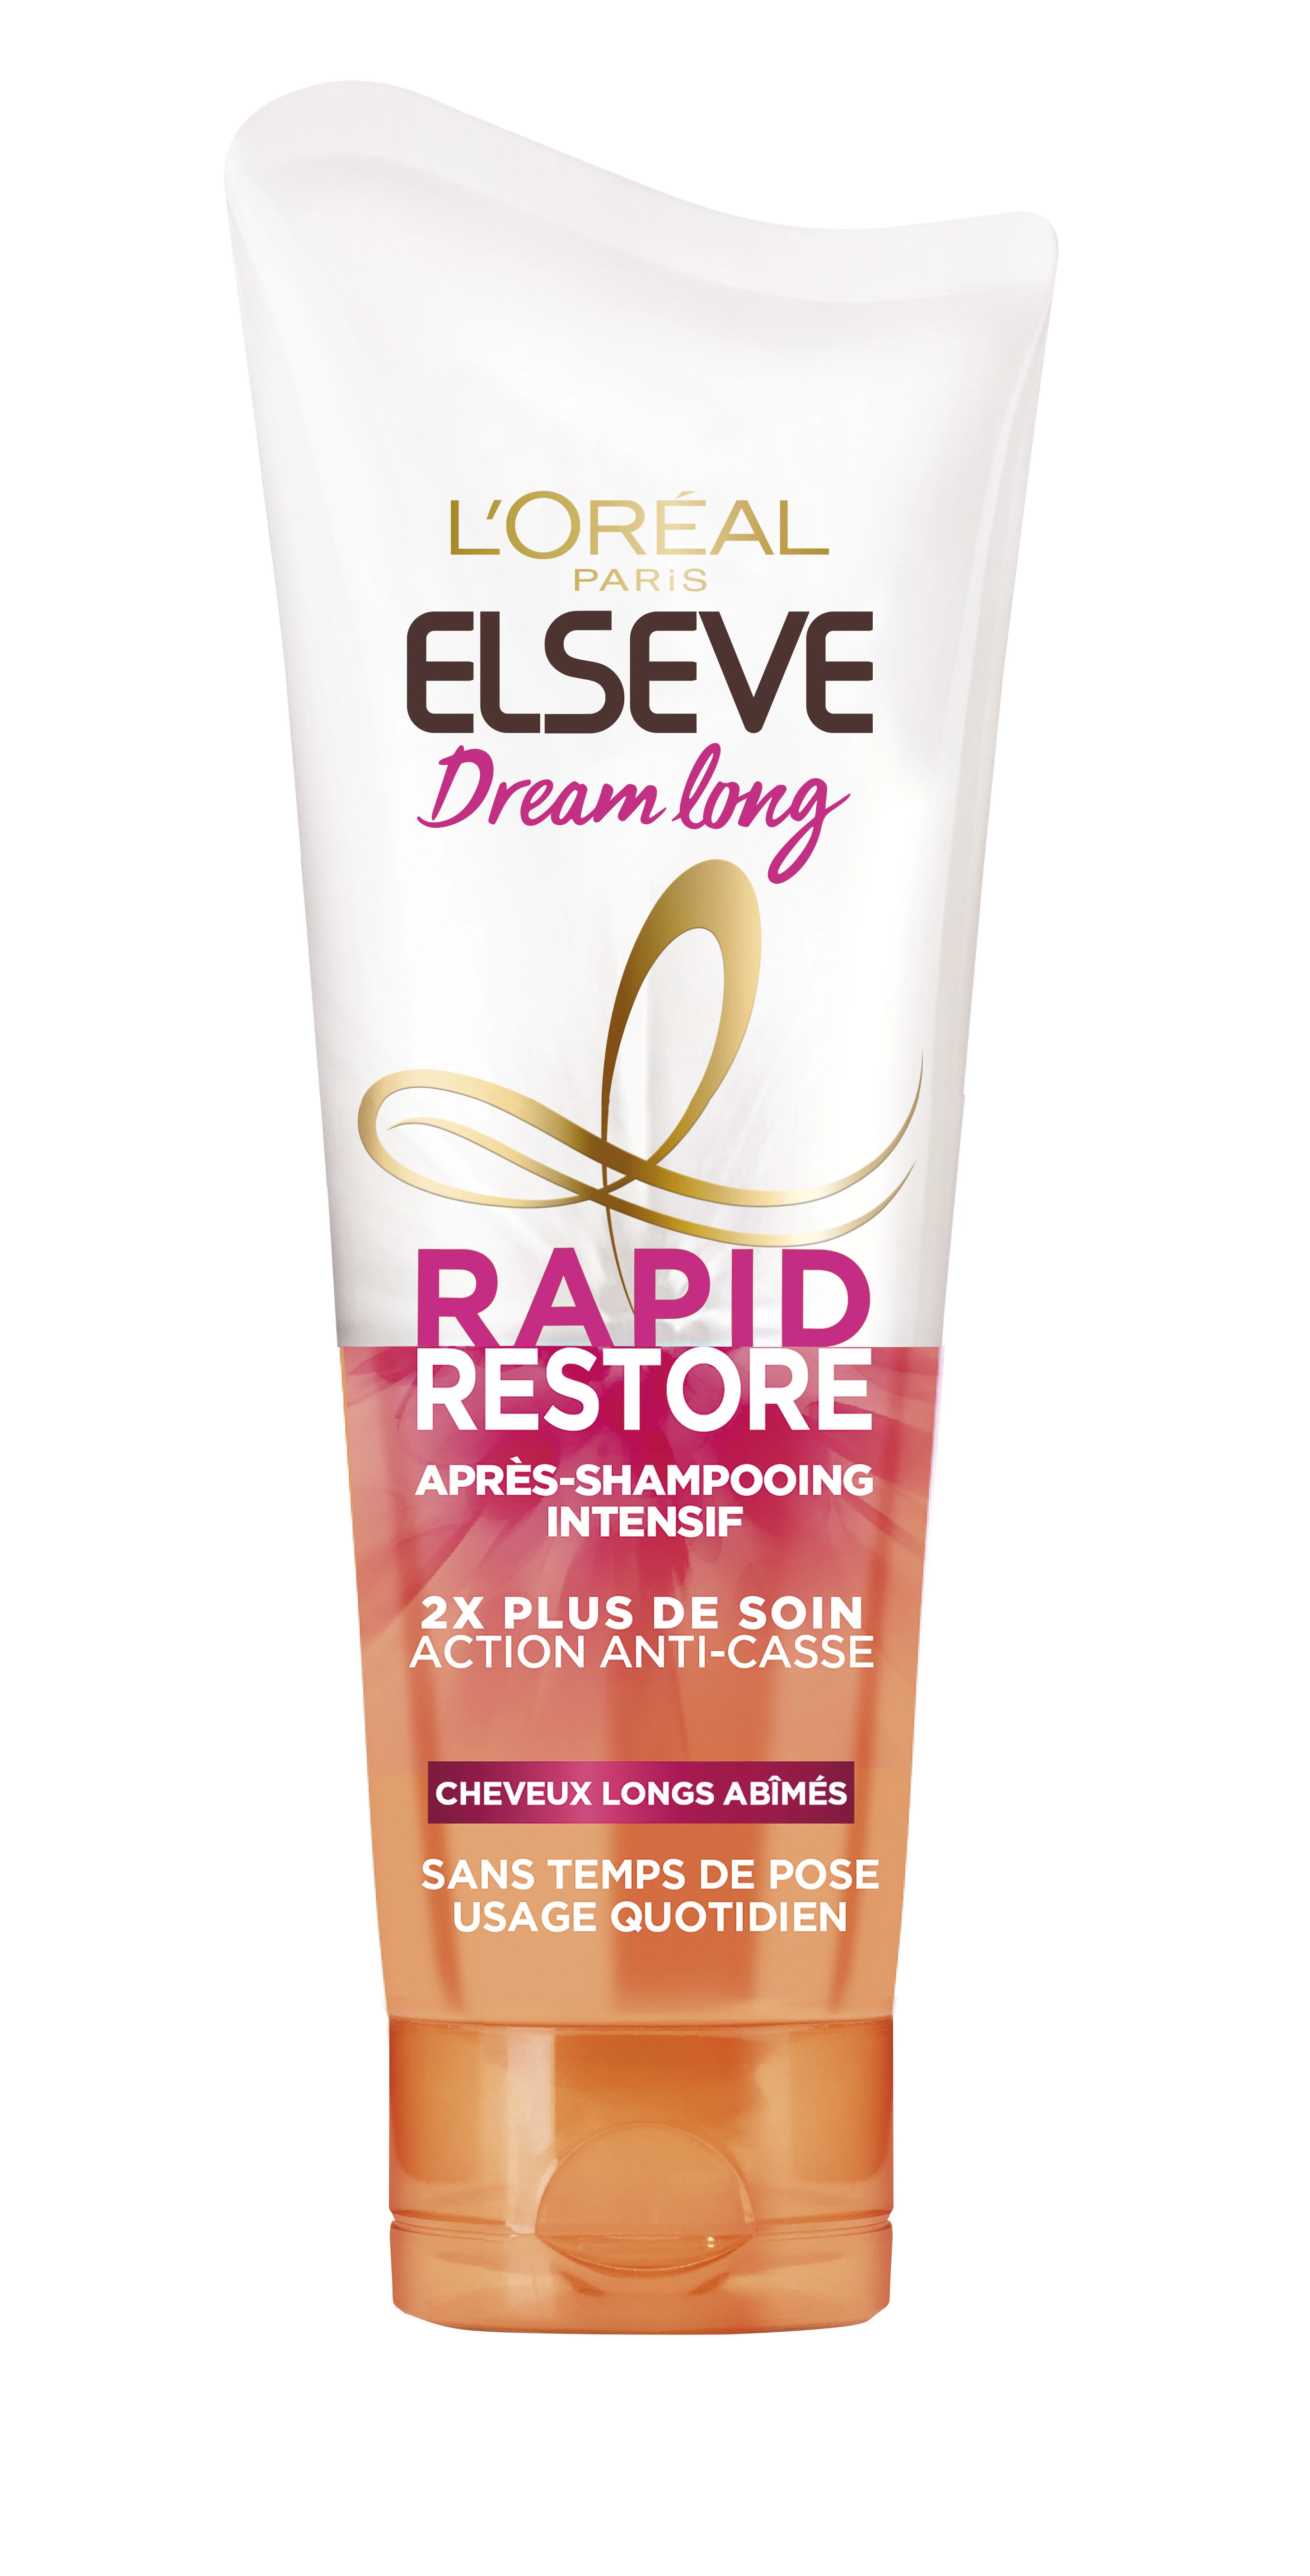 Après-shampooing intensif rapid restore 180ml - L’ORÉAL